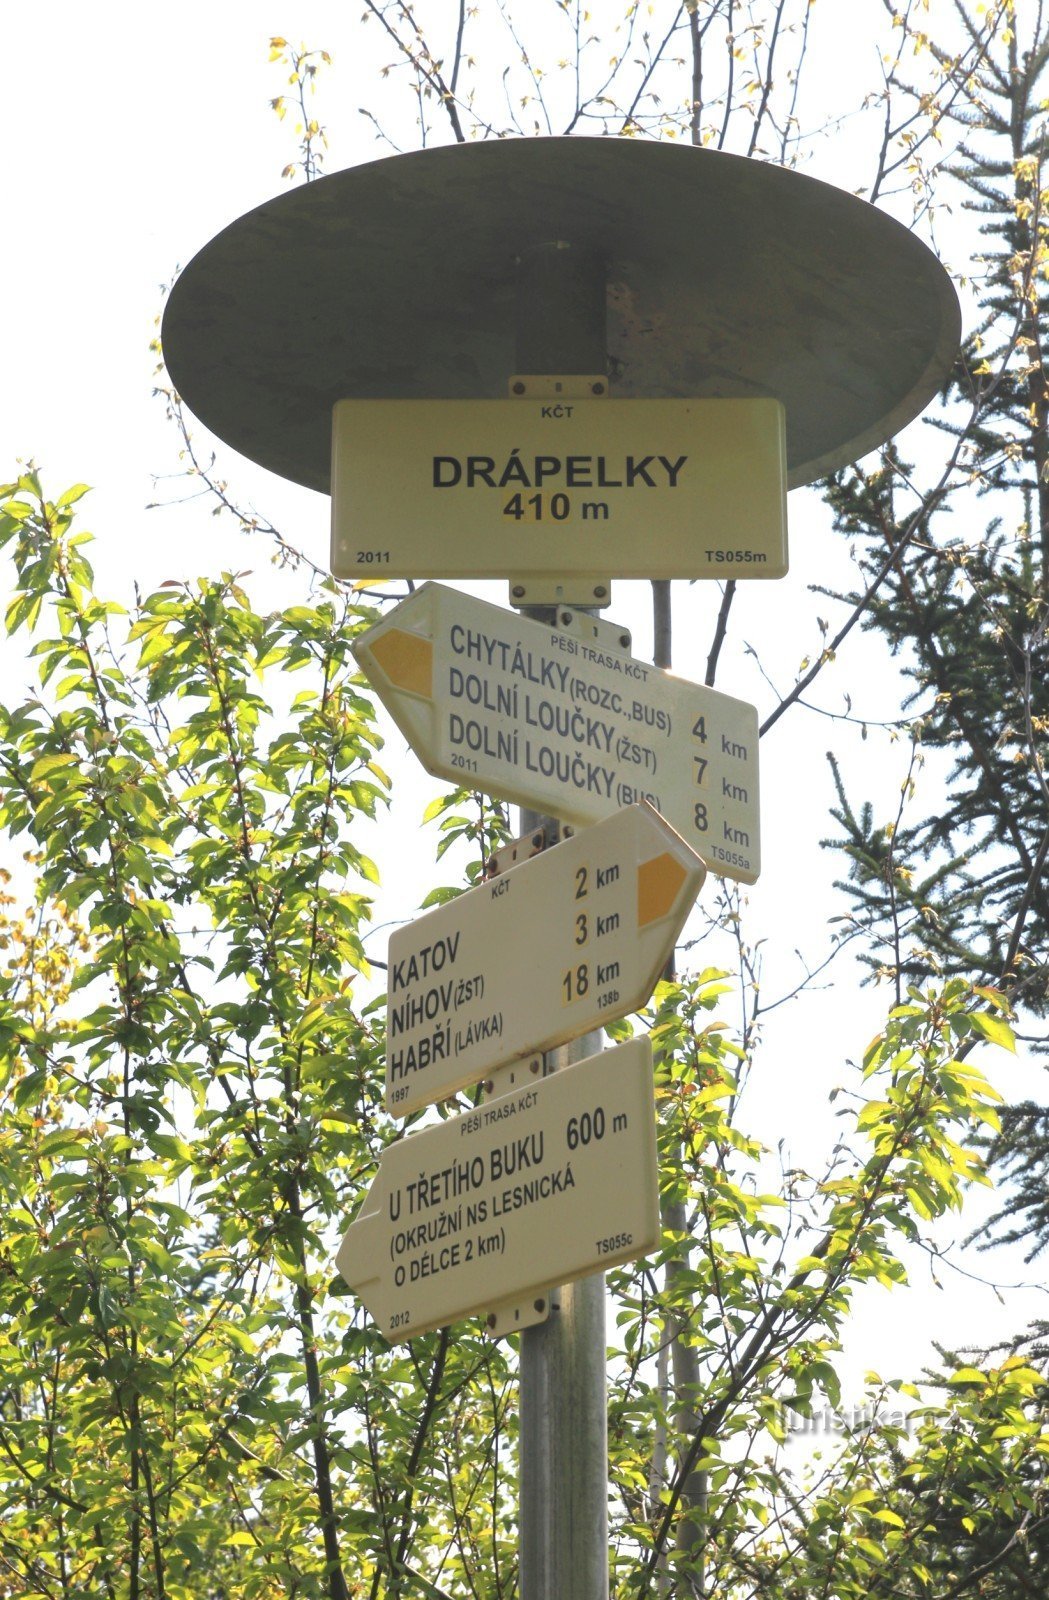 Drápelky răscruce turistică